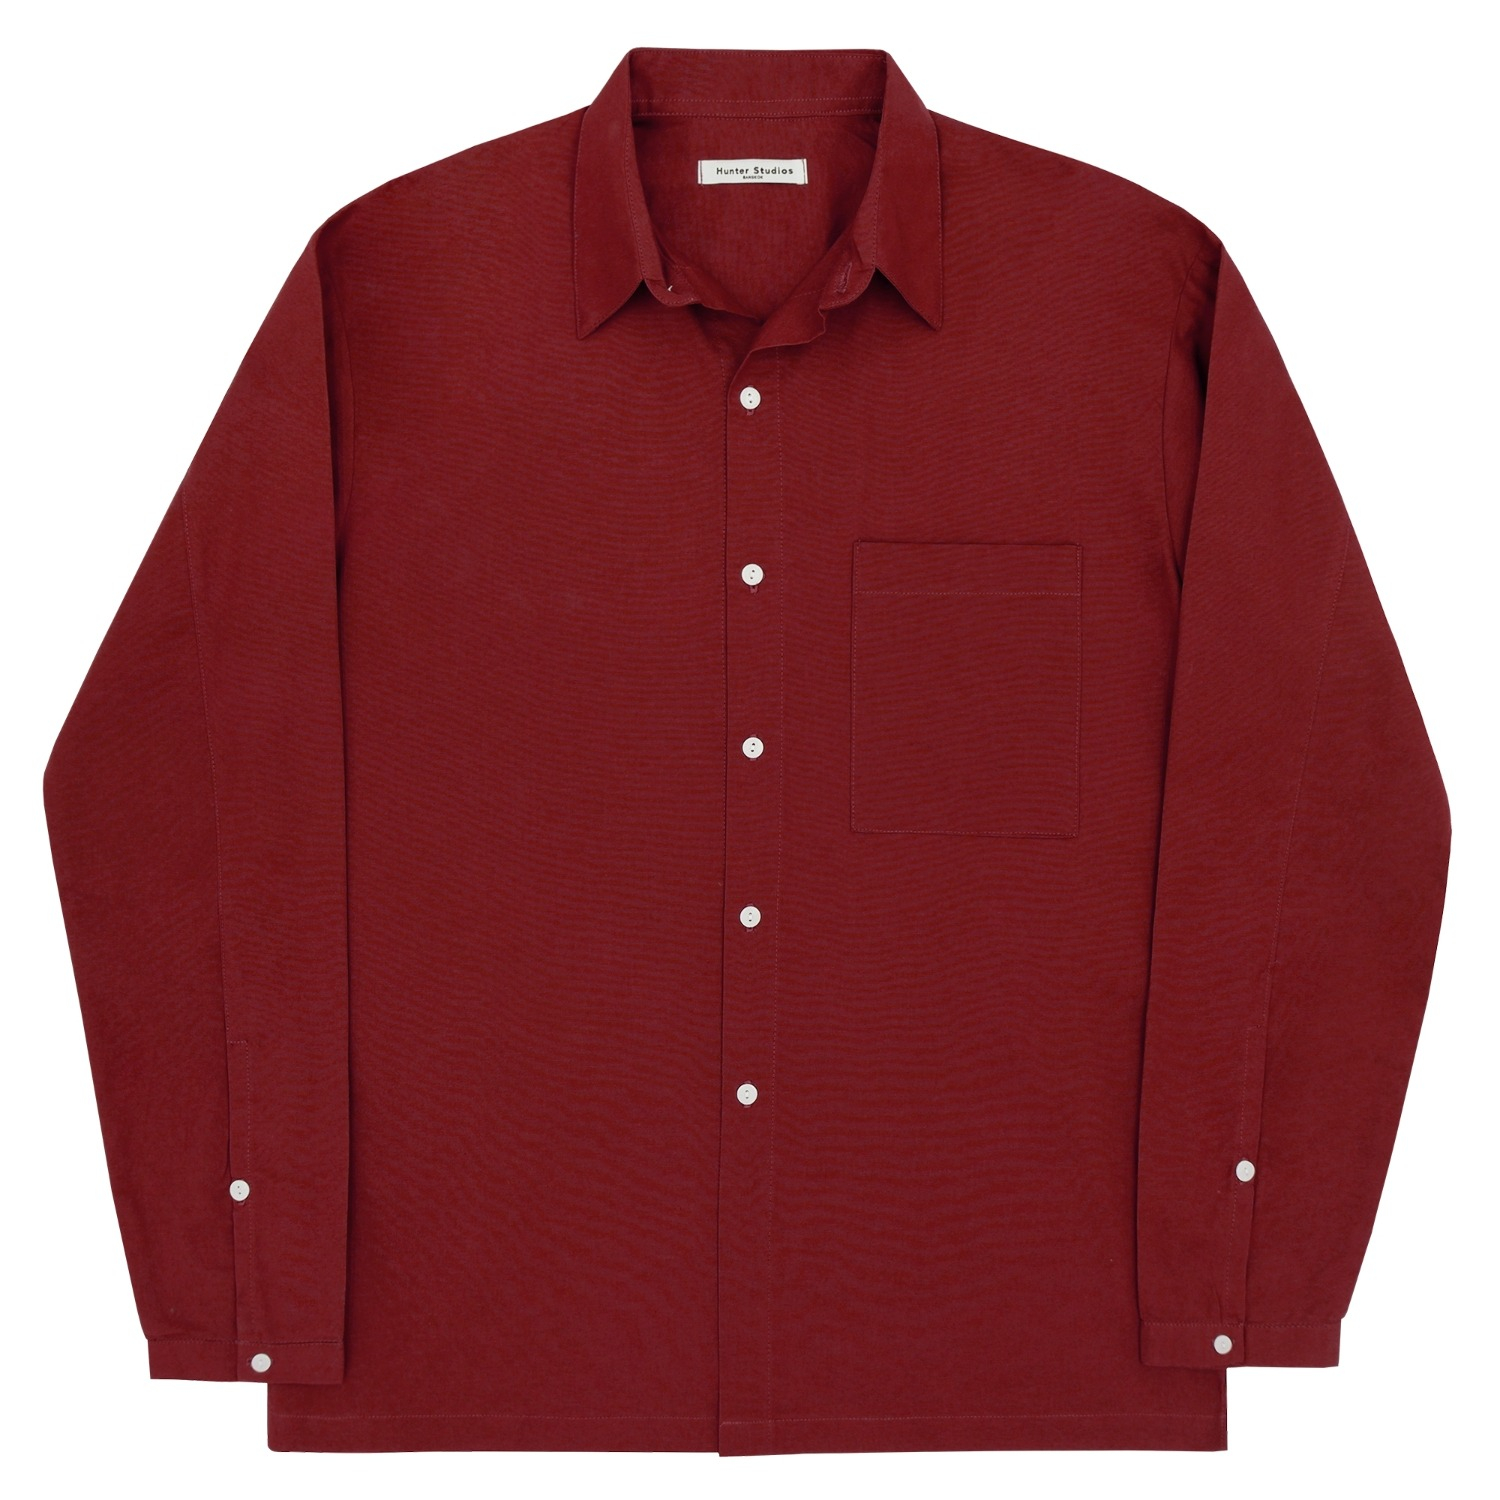 Fainly Long Shirt (Red)